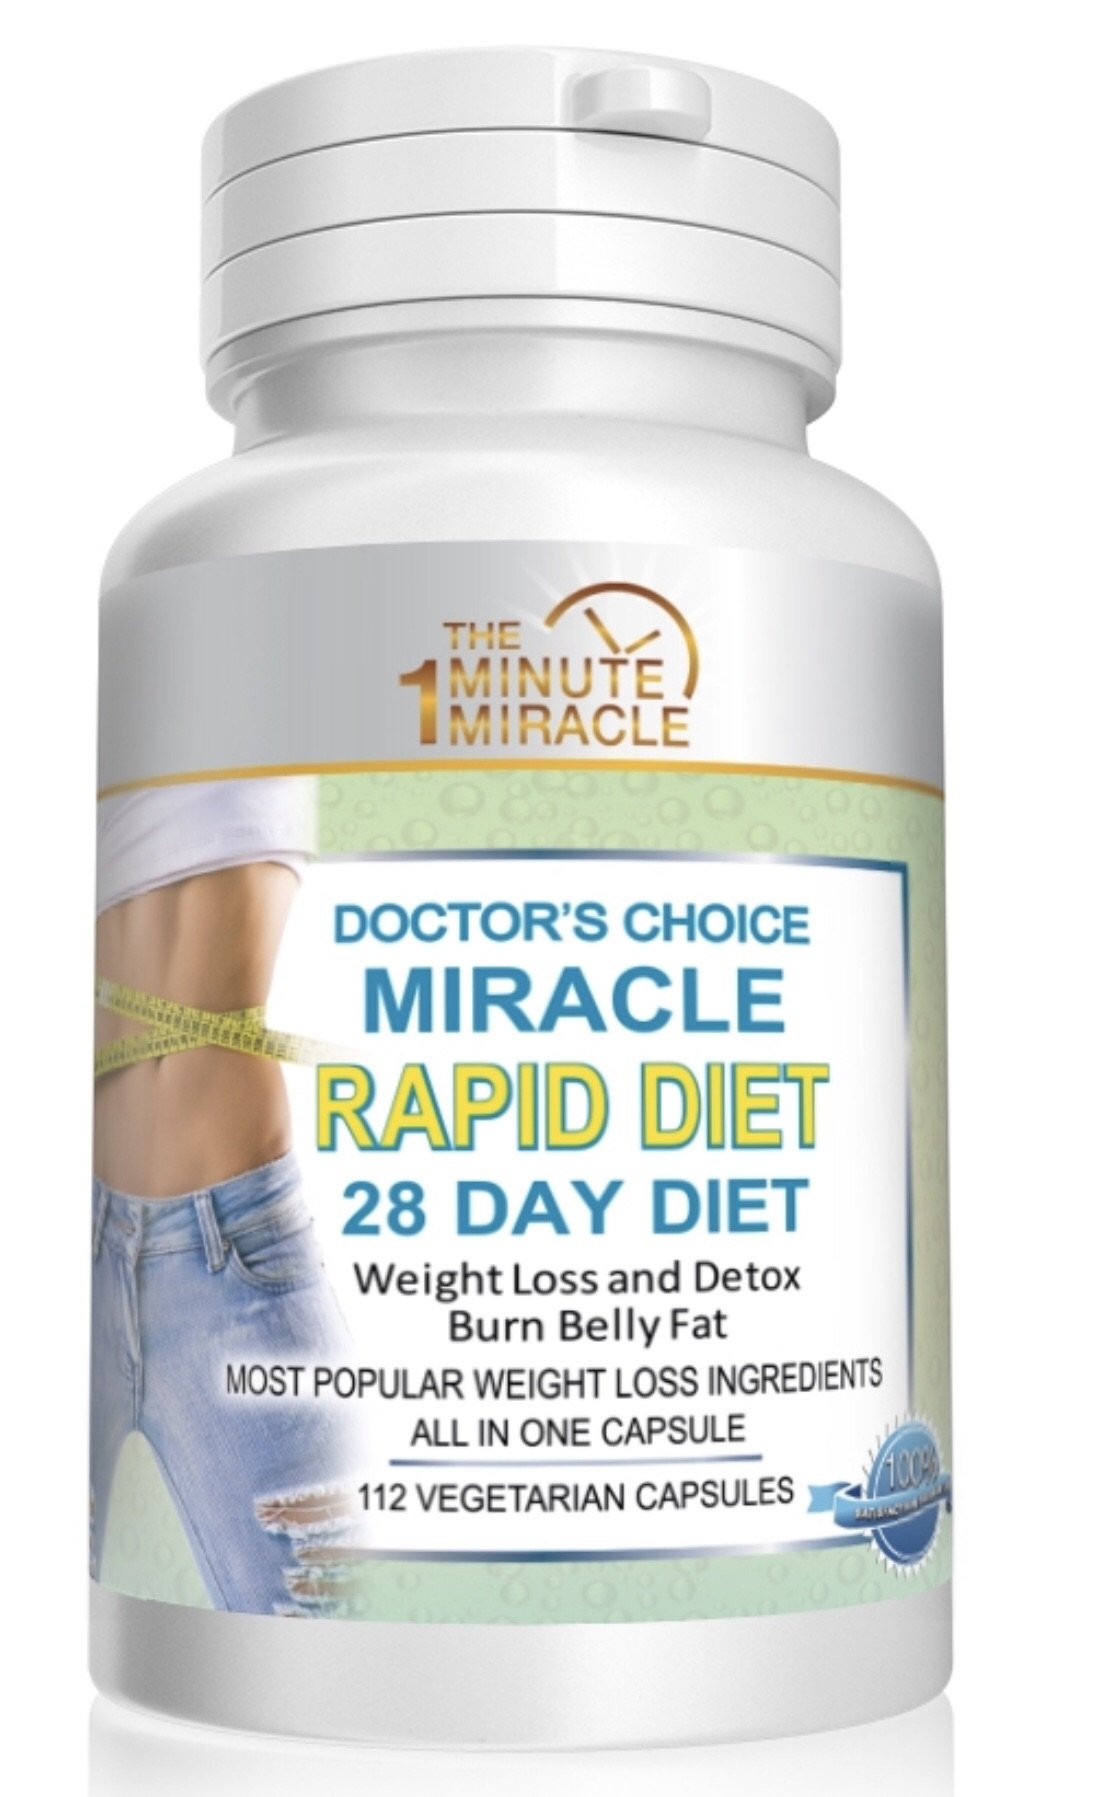 Keto Rapid Diet
 Keto Diet Miracle Rapid Diet 28 DAY DIET – The e Minute